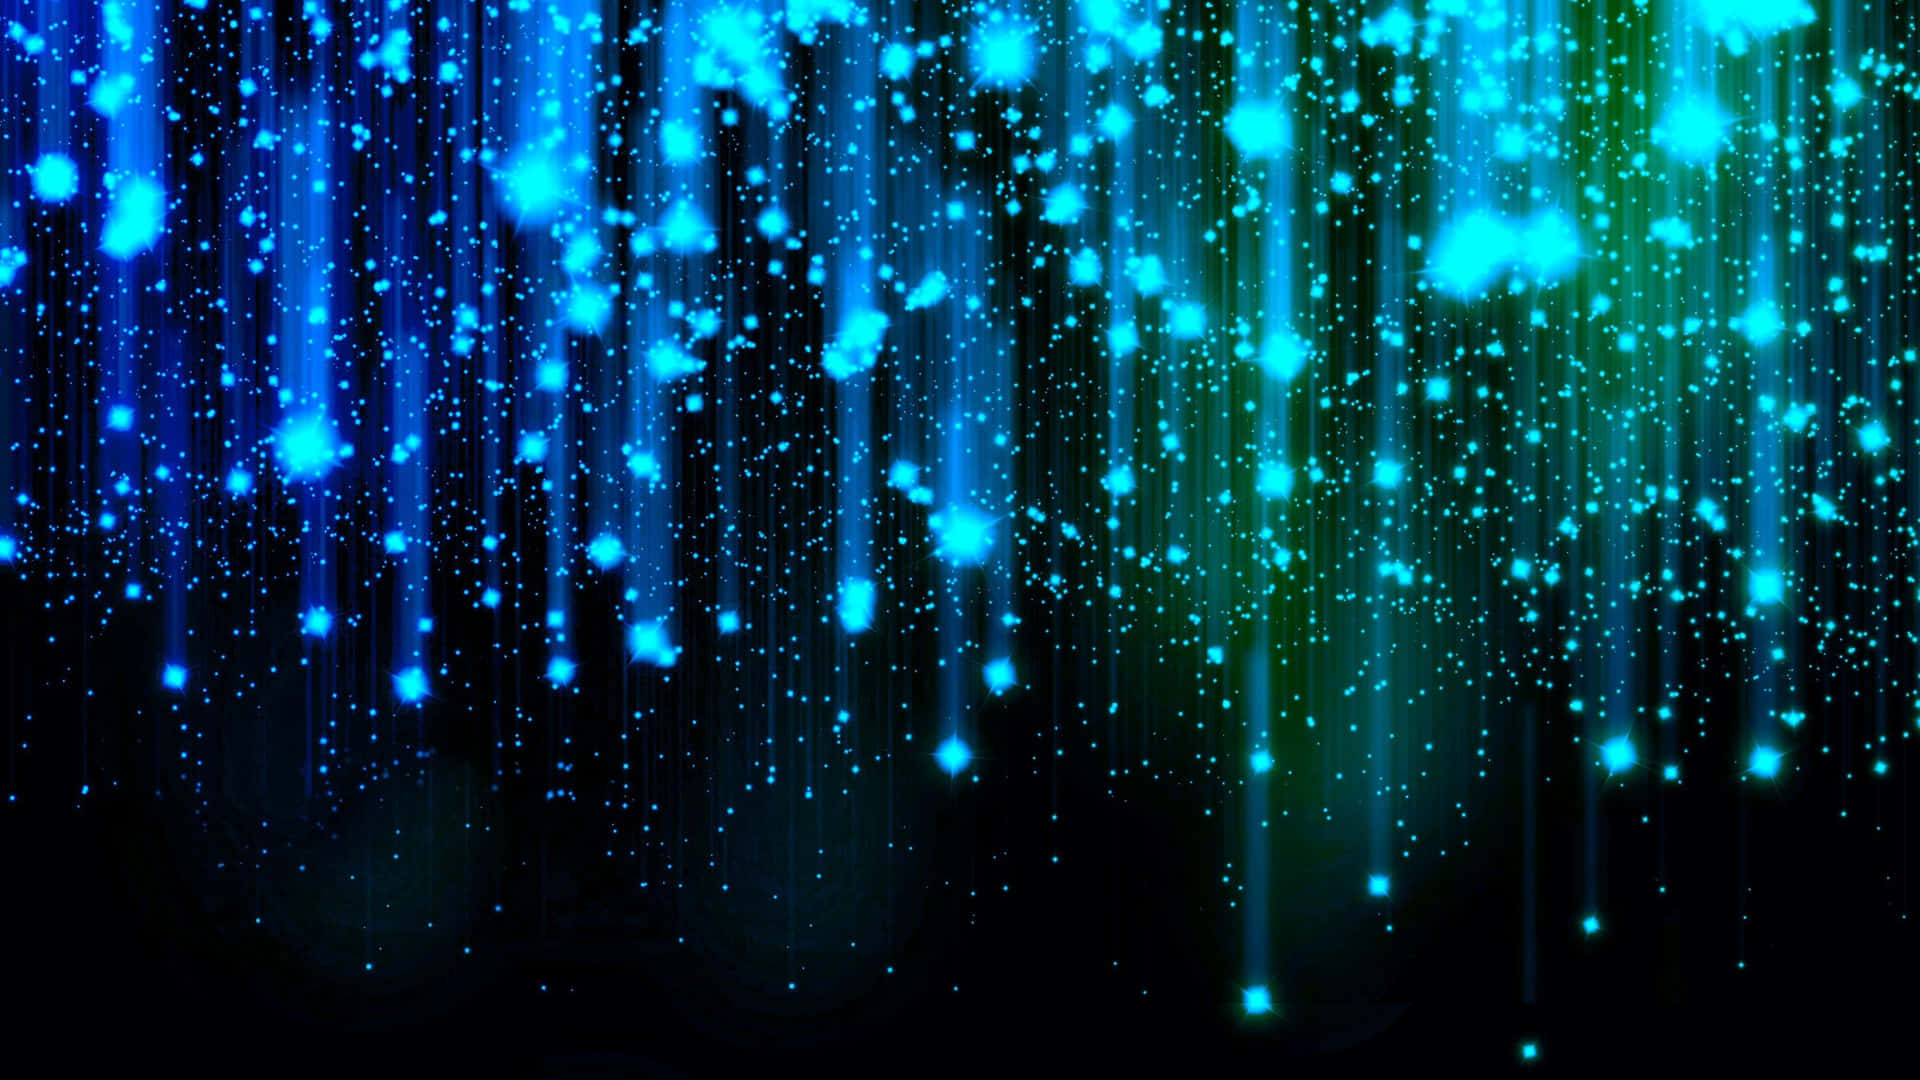 A beautiful blue sparkle background